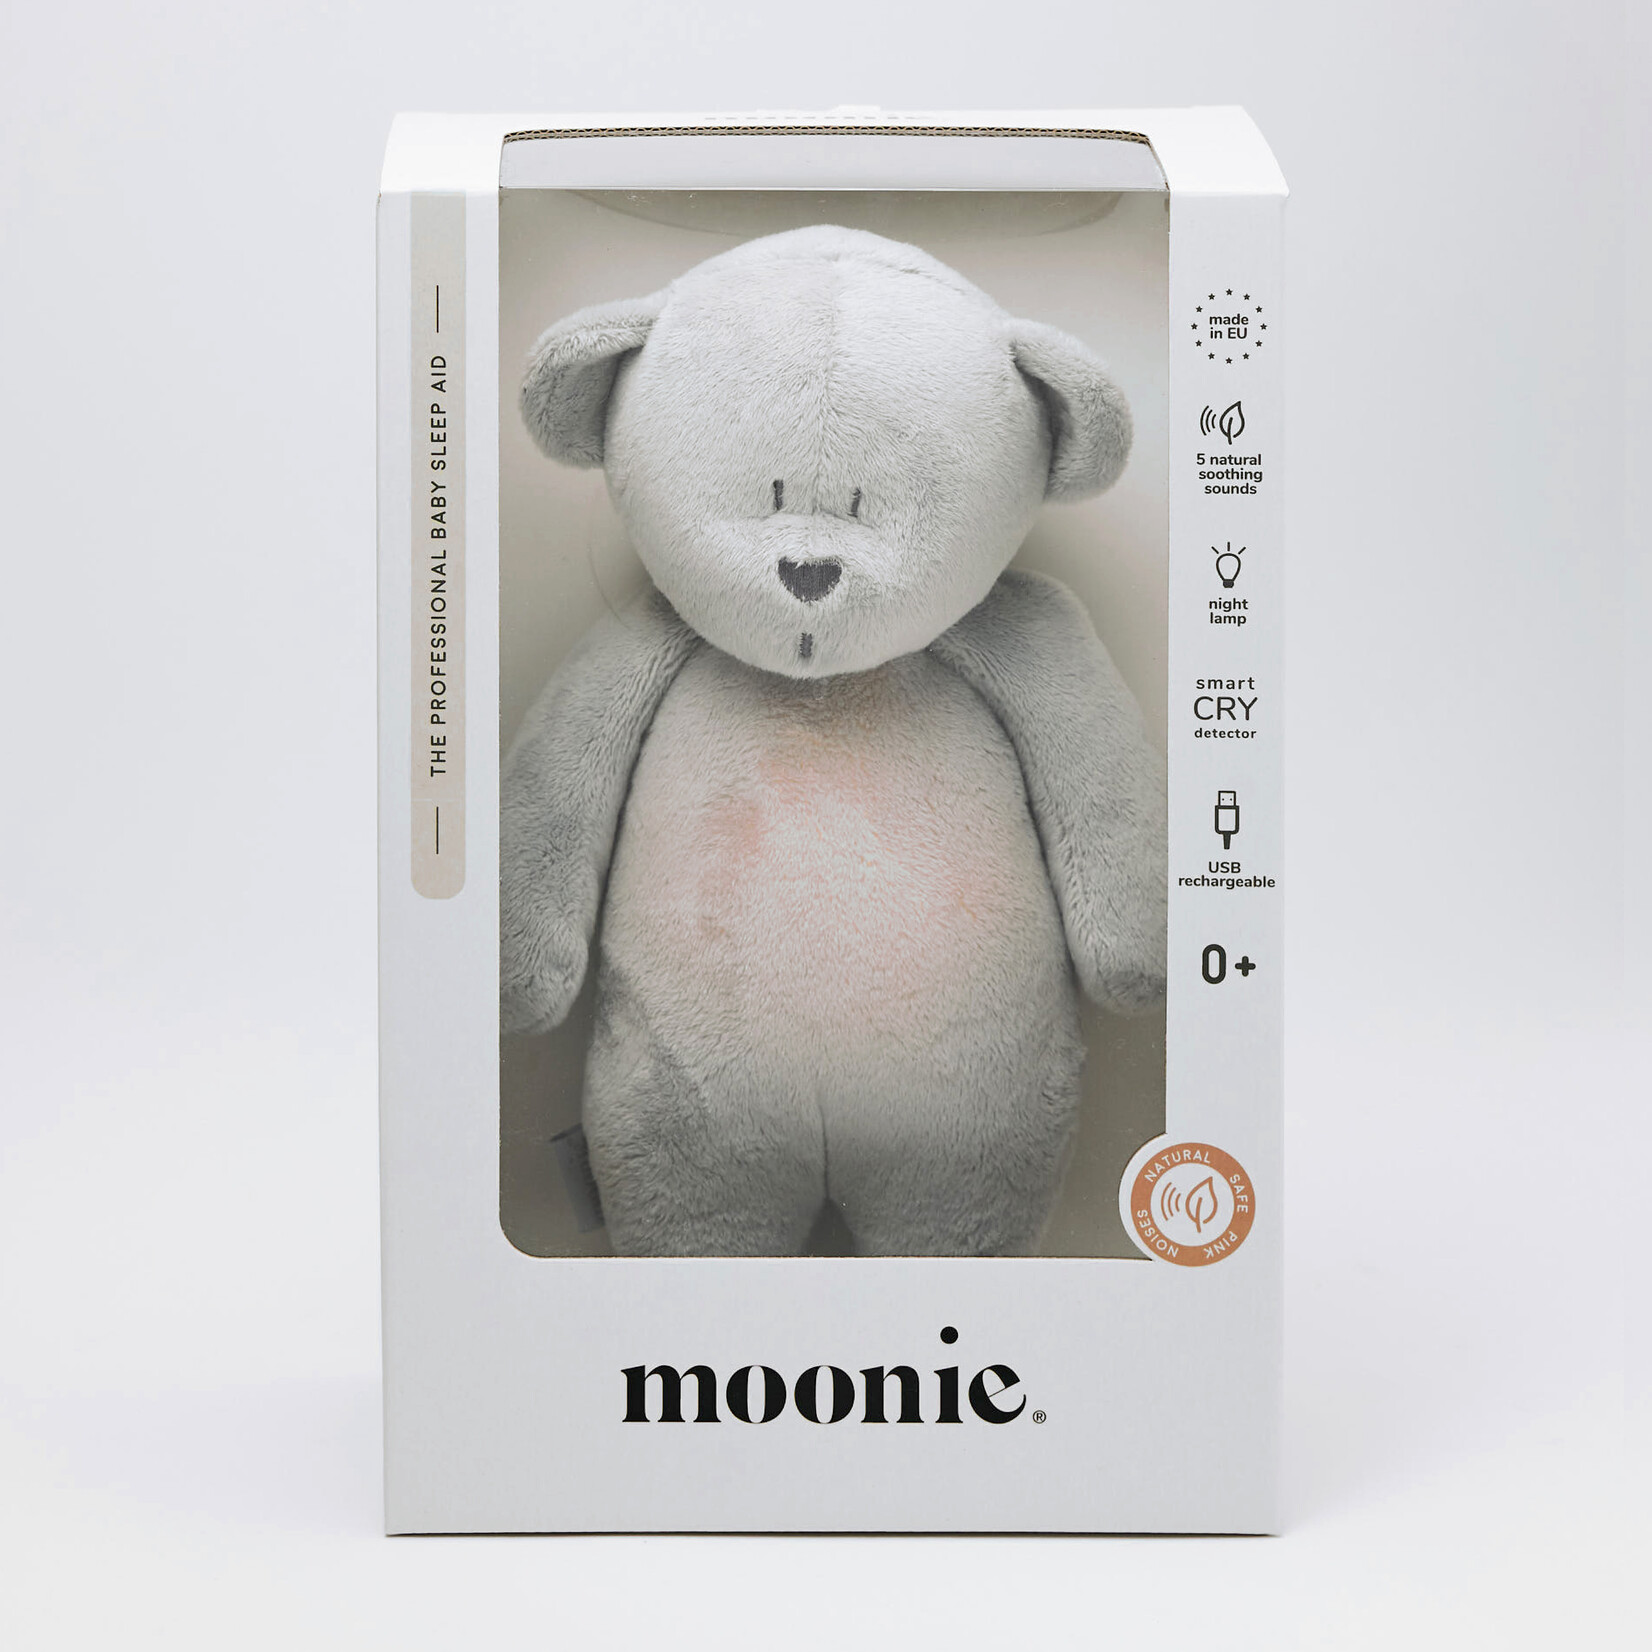 Moonie // The humming bear